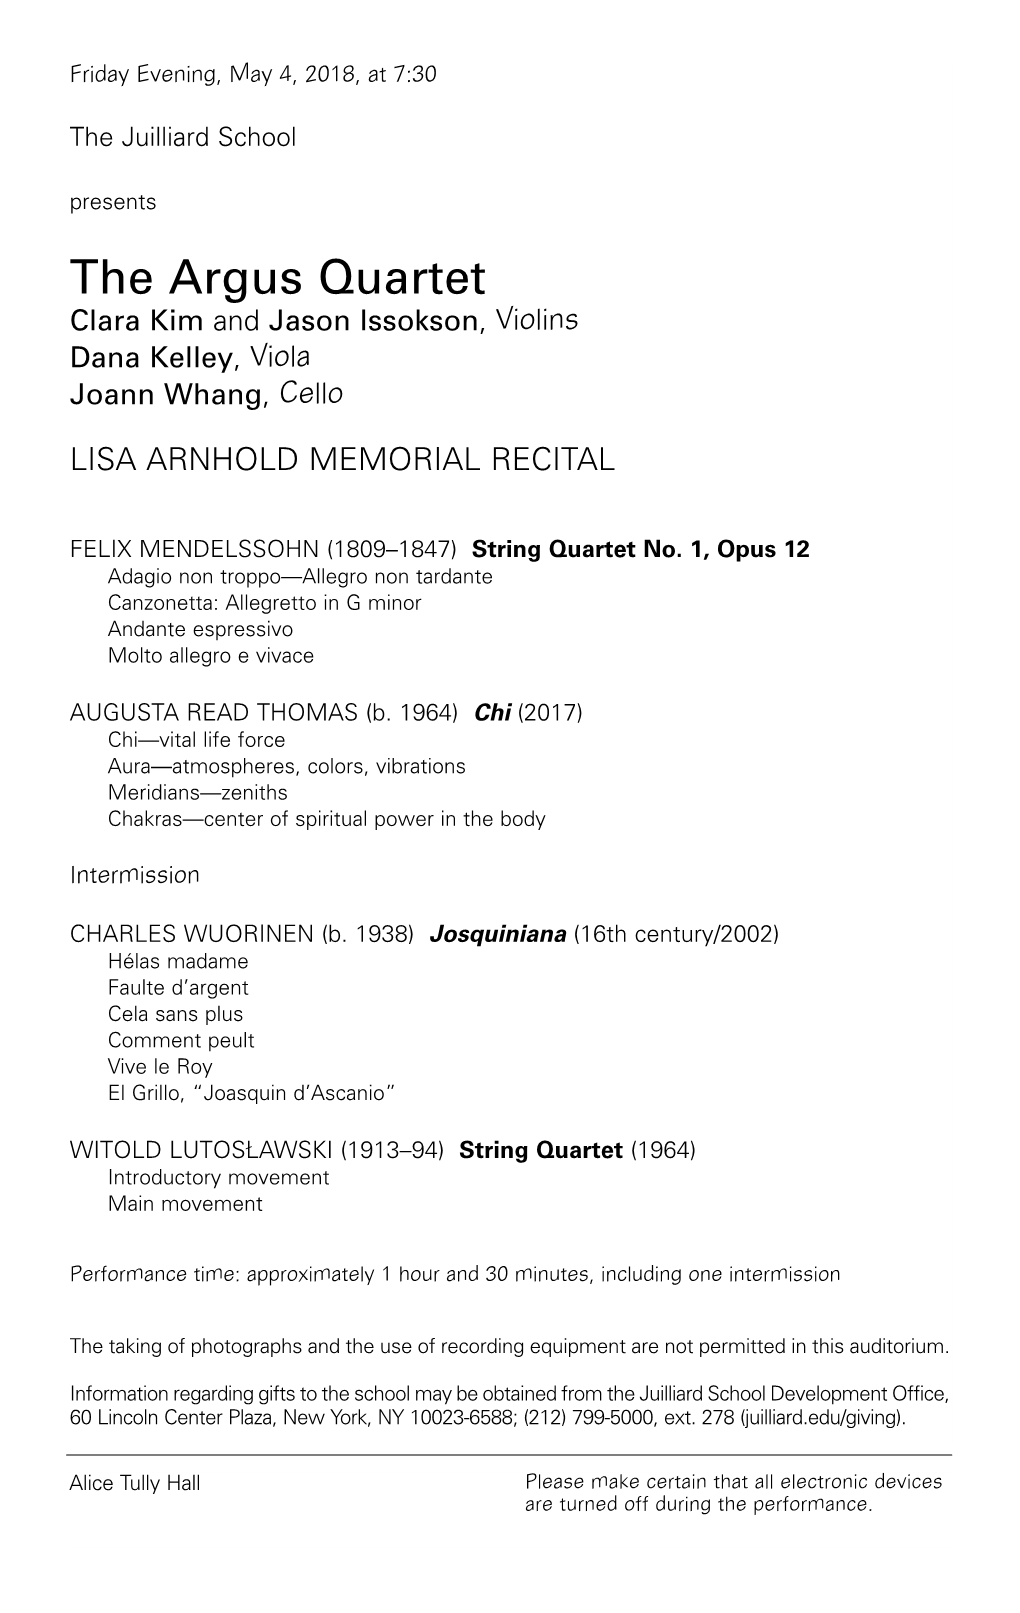 The Argus Quartet Clara Kim and Jason Issokson , Violins Dana Kelley , Viola Joann Whang , Cello